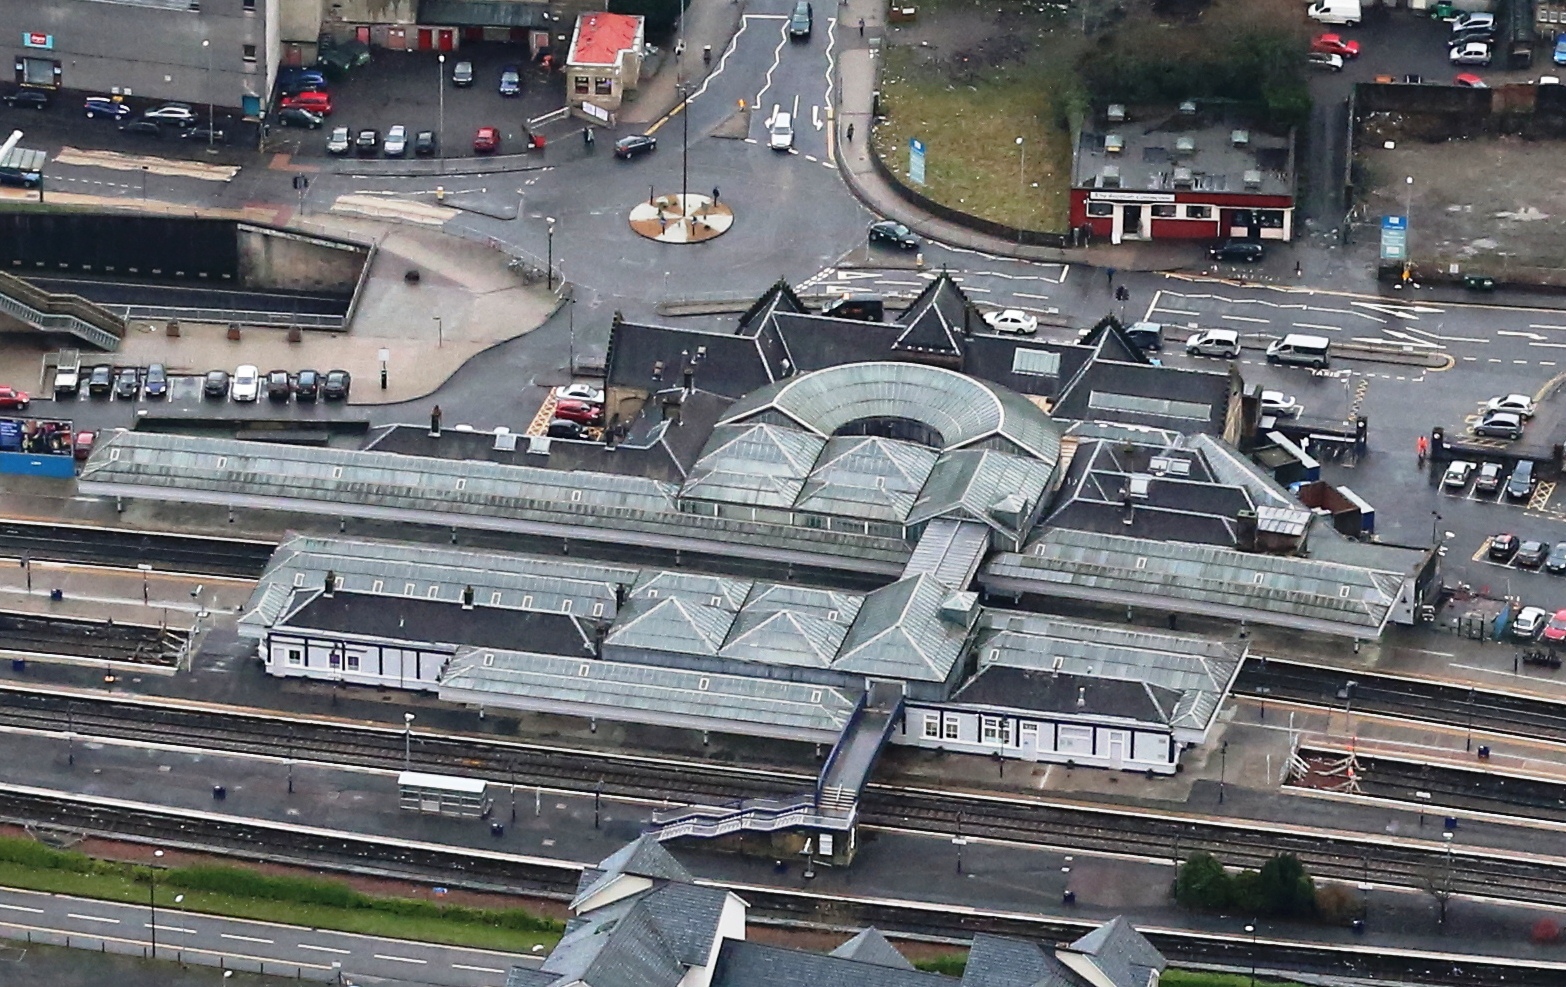 Stirling station roof set for £3m refurb investment